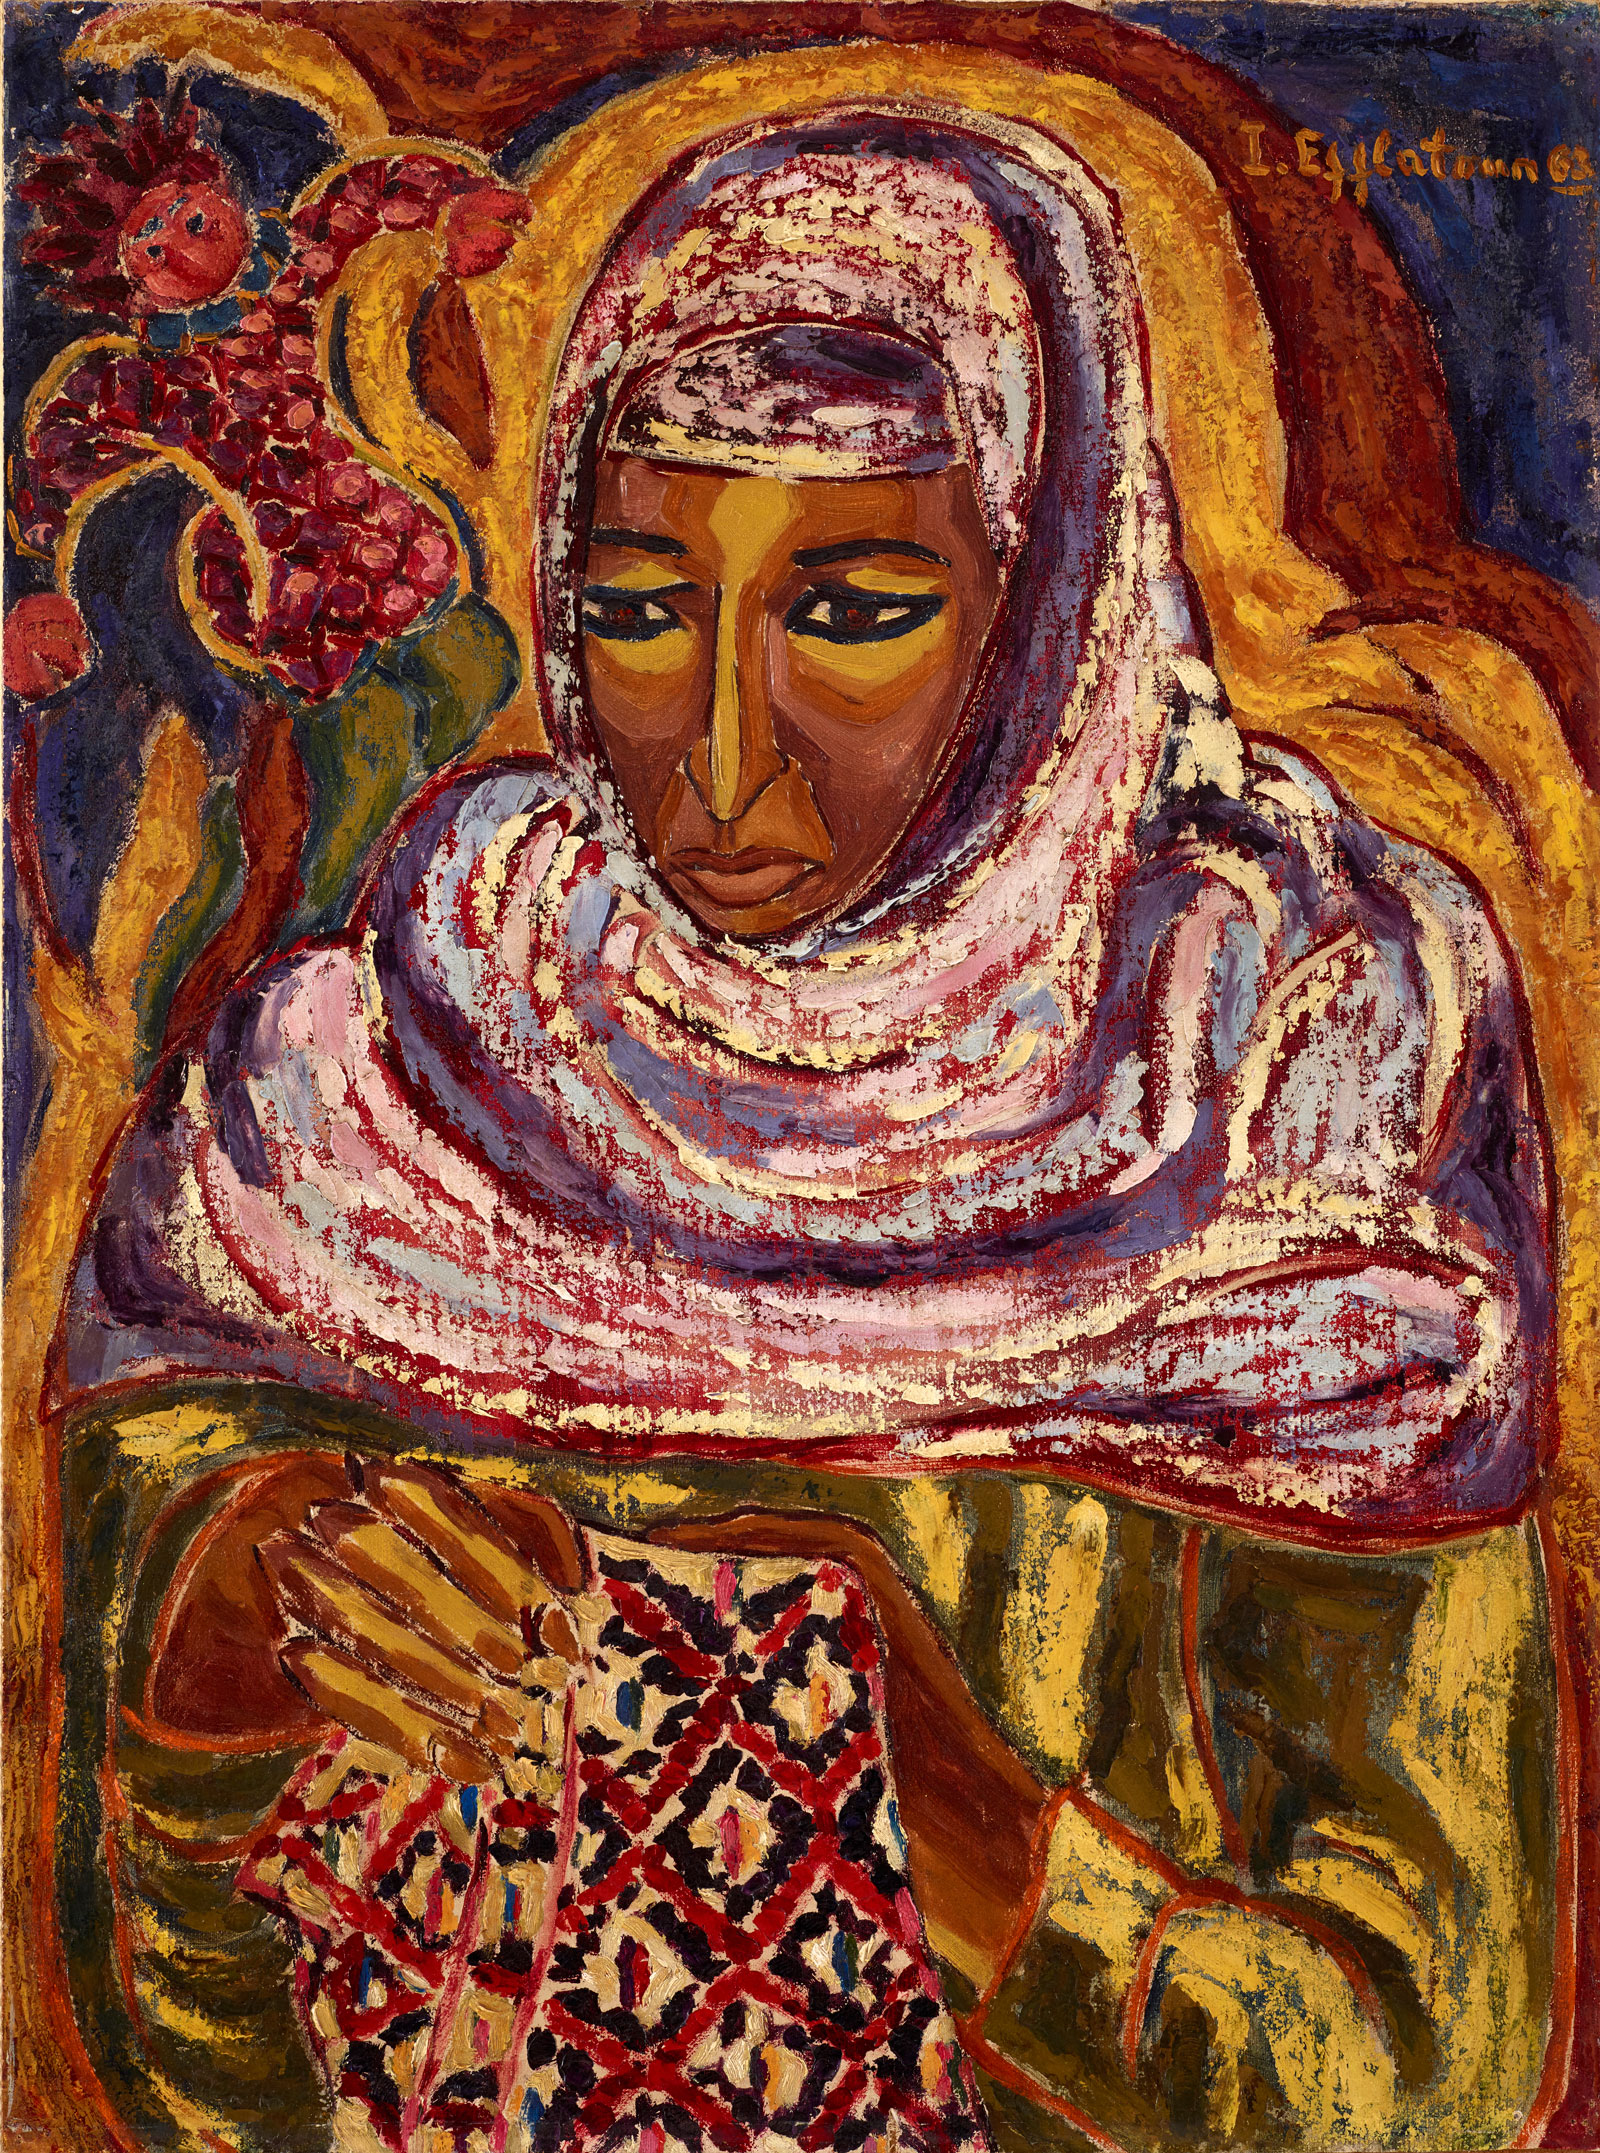 Inji Efflatoun, Portrait of a Prisoner, 1963